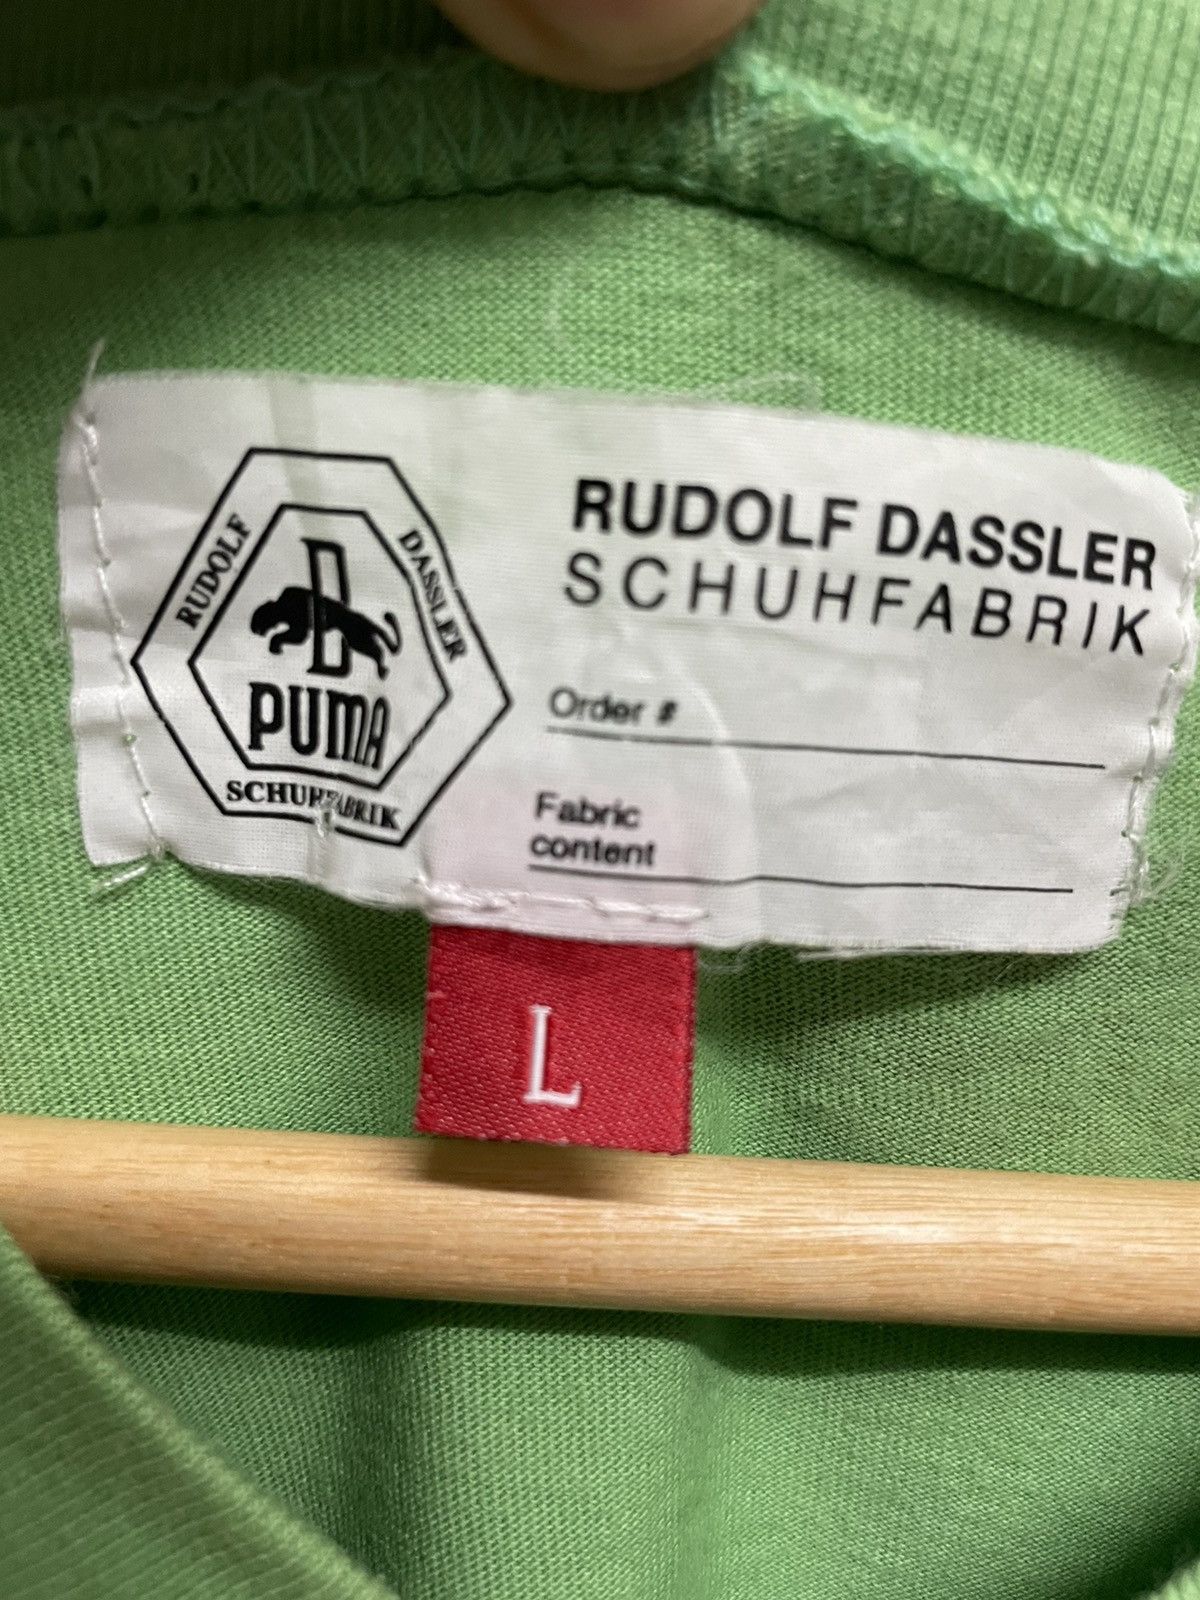 Puma Puma ❌ Rudolf Dassler T shirt Size US M / EU 48-50 / 2 - 8 Thumbnail